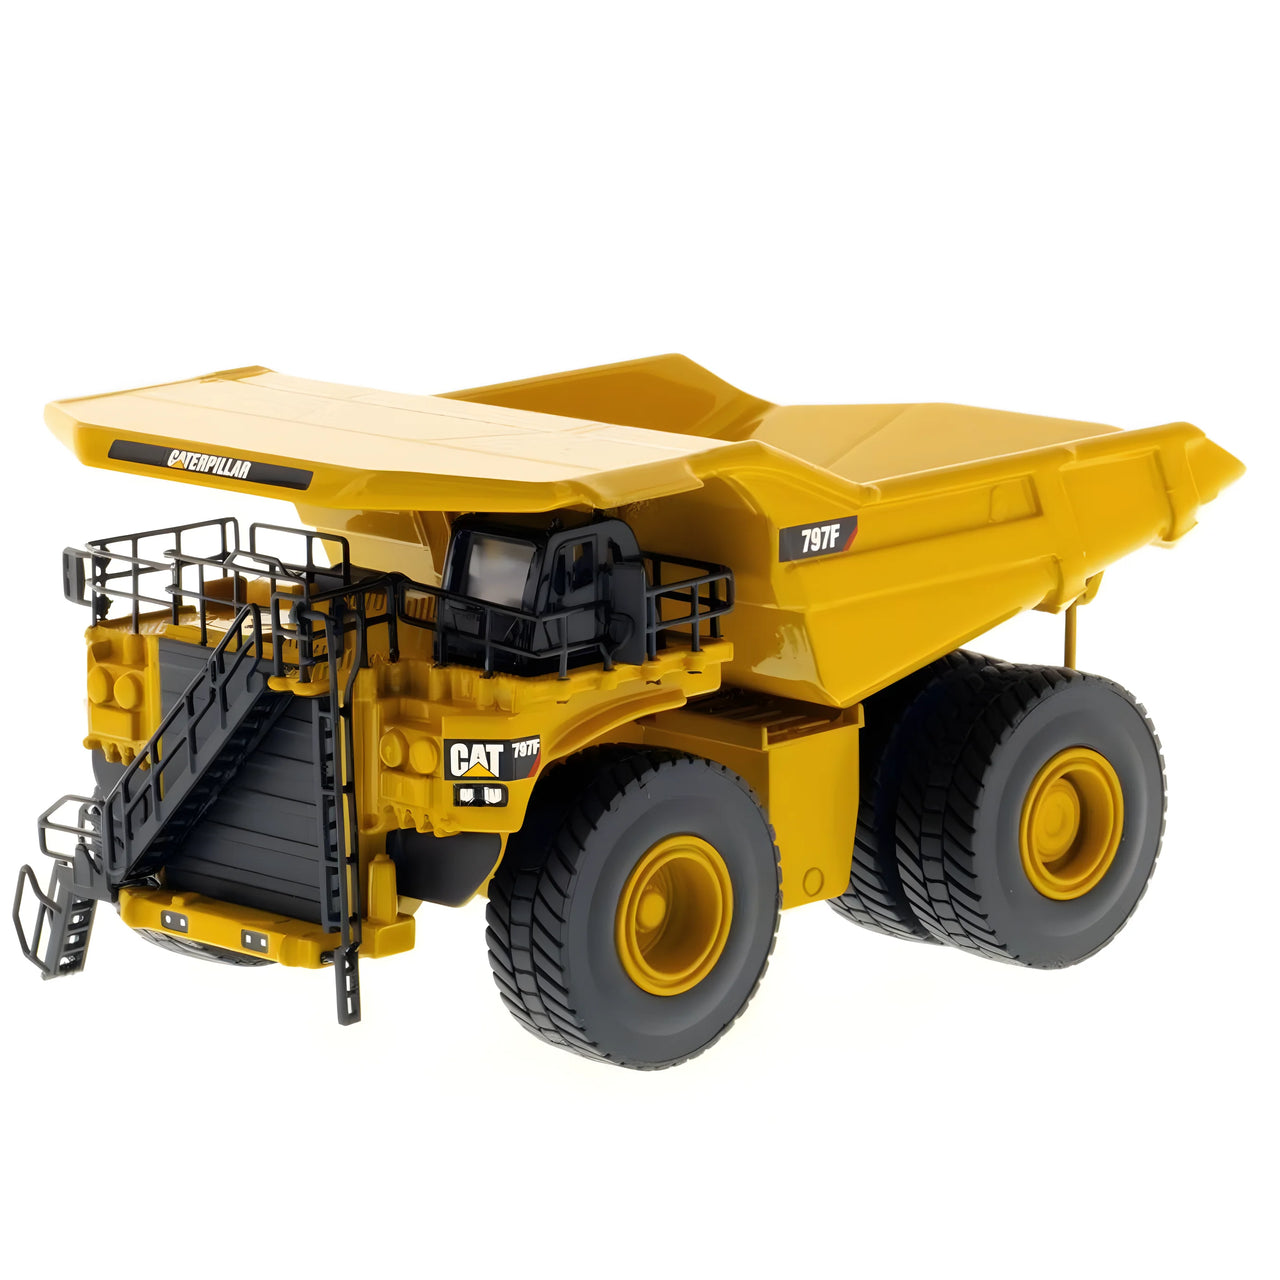 85536 Caterpillar 797F Mining Truck Scale 1:125 (Discontinued Model)